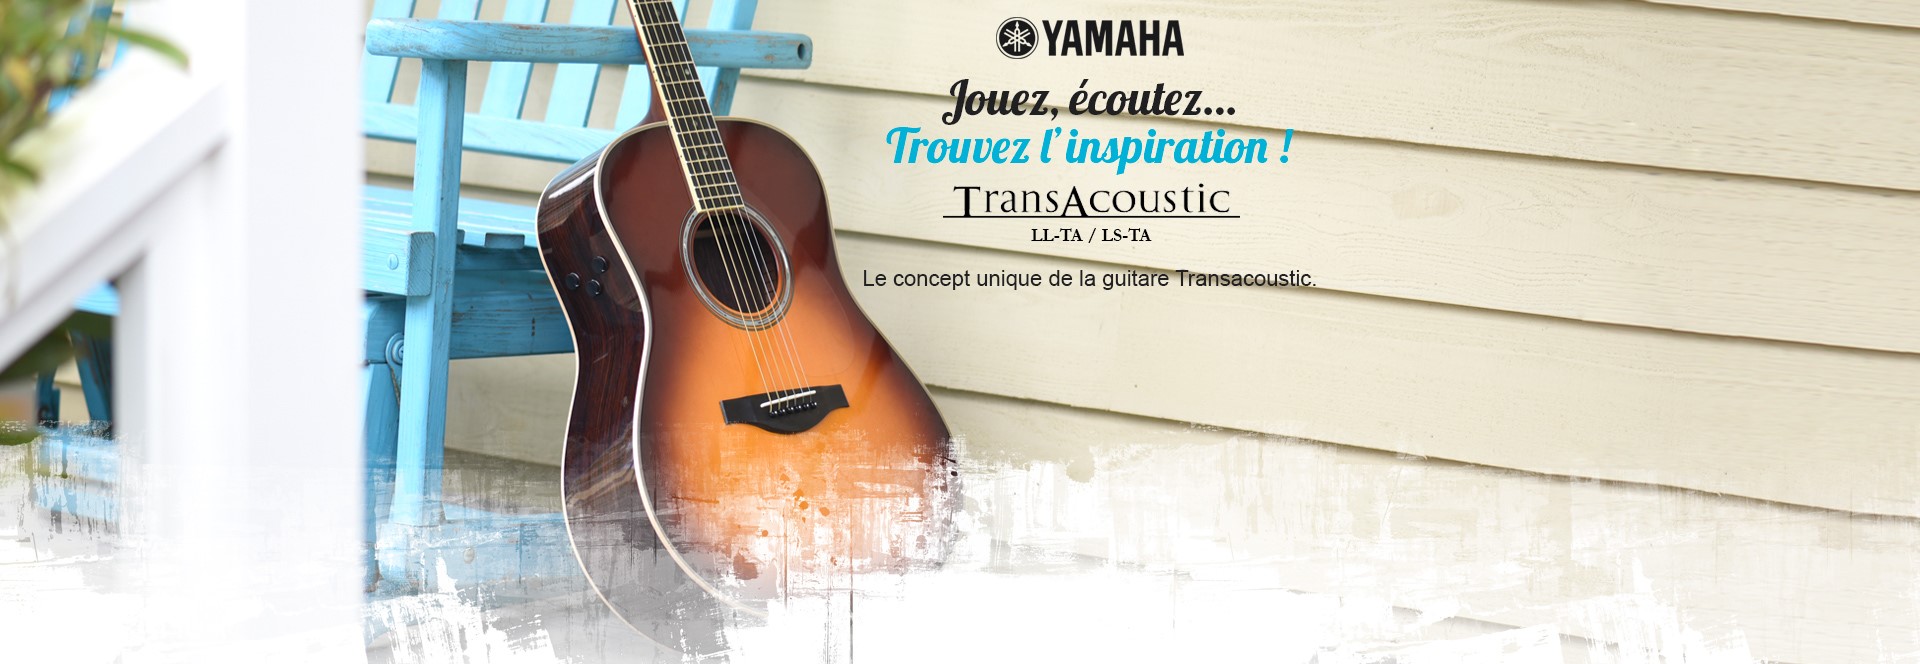 Yamaha Transacoustics